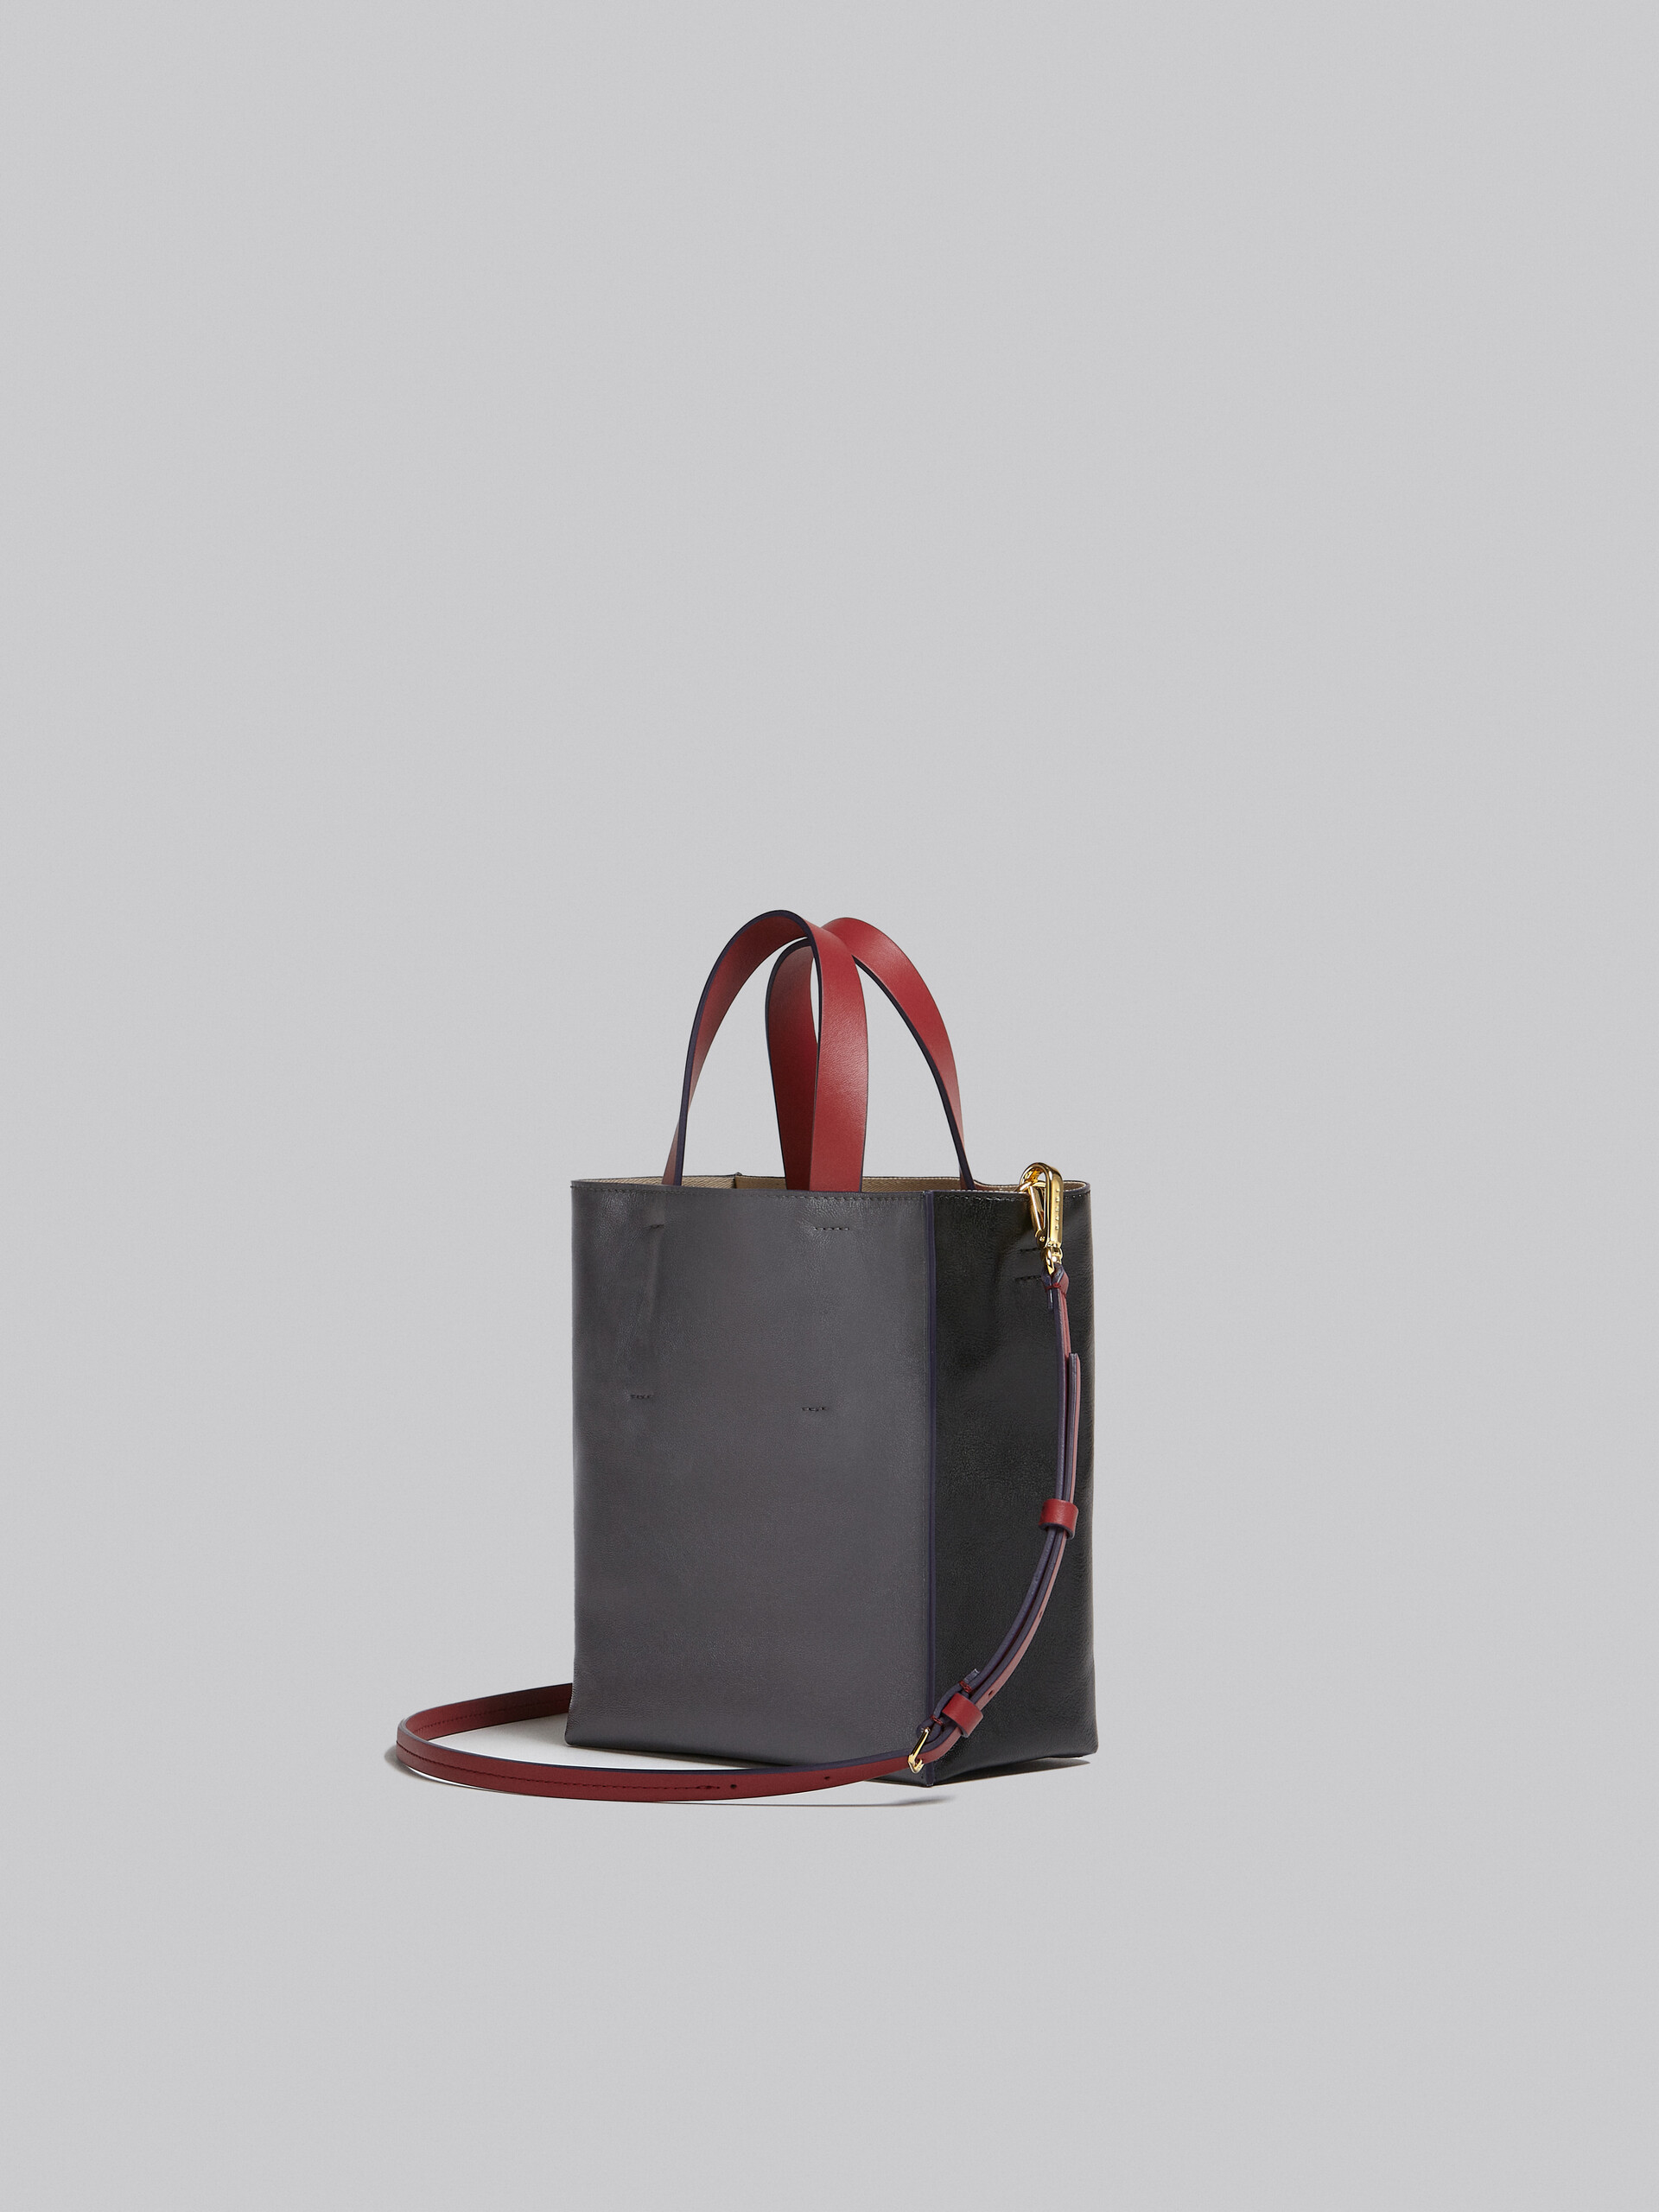 Museo Soft Bag Mini in pelle grigia nera e bordeaux - Borse shopping - Image 3